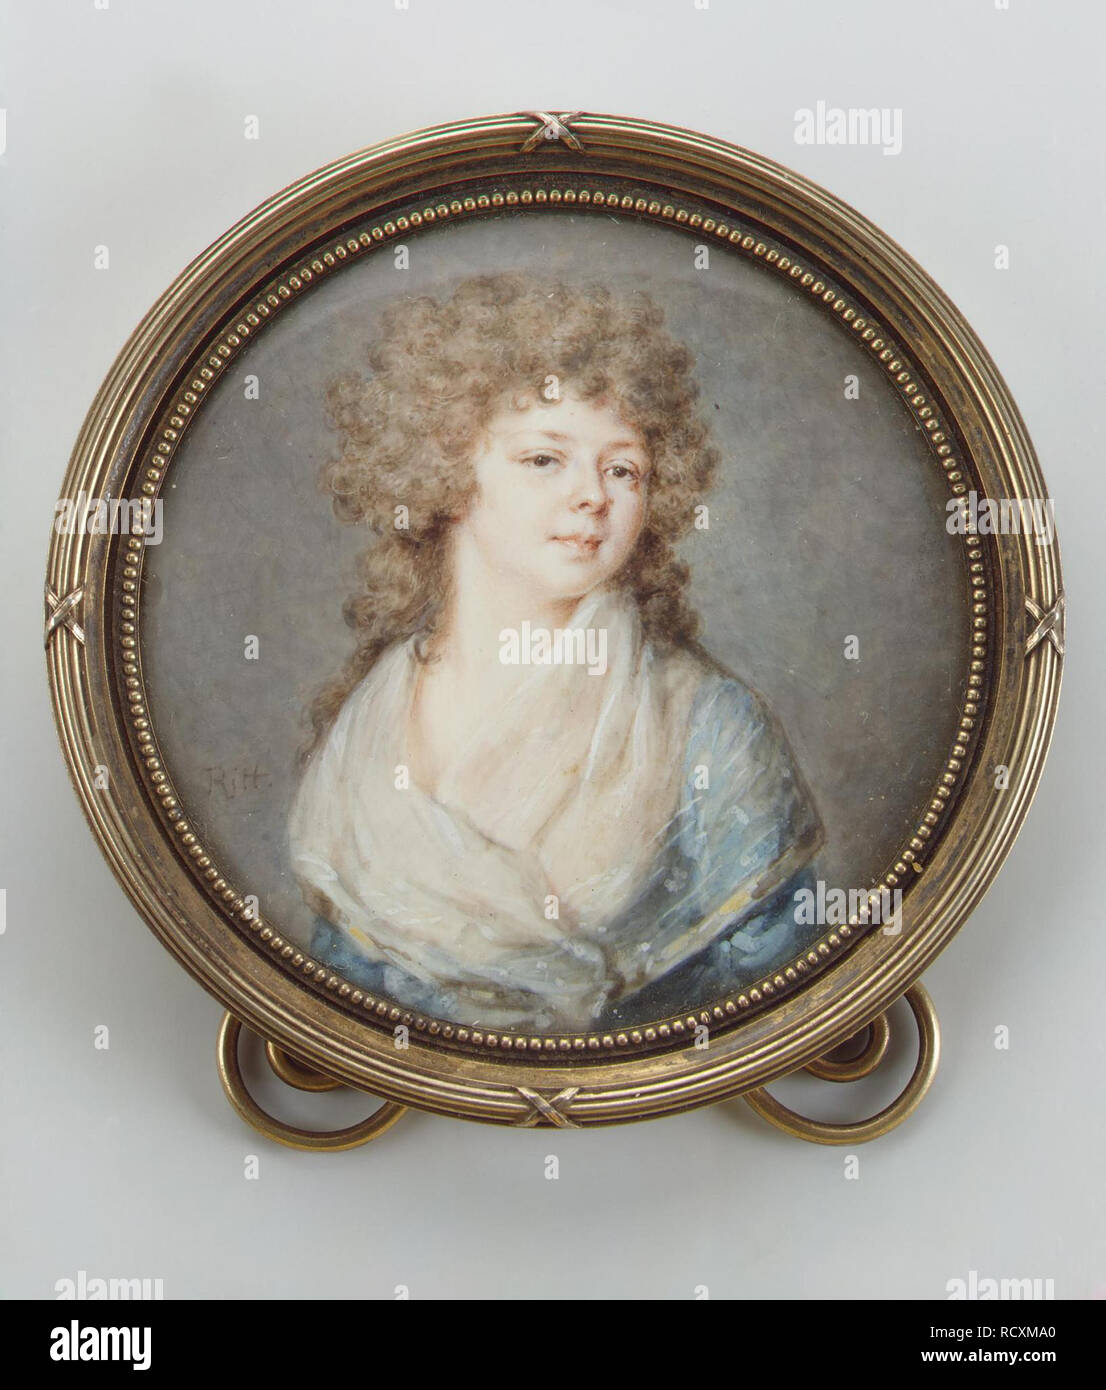 Portrait of Countess Tatyana Vasilyevna Yusupova, née von Engelhardt (1769-1841). Museum: State Hermitage, St. Petersburg. Author: Ritt, Augustin Christian. Stock Photo